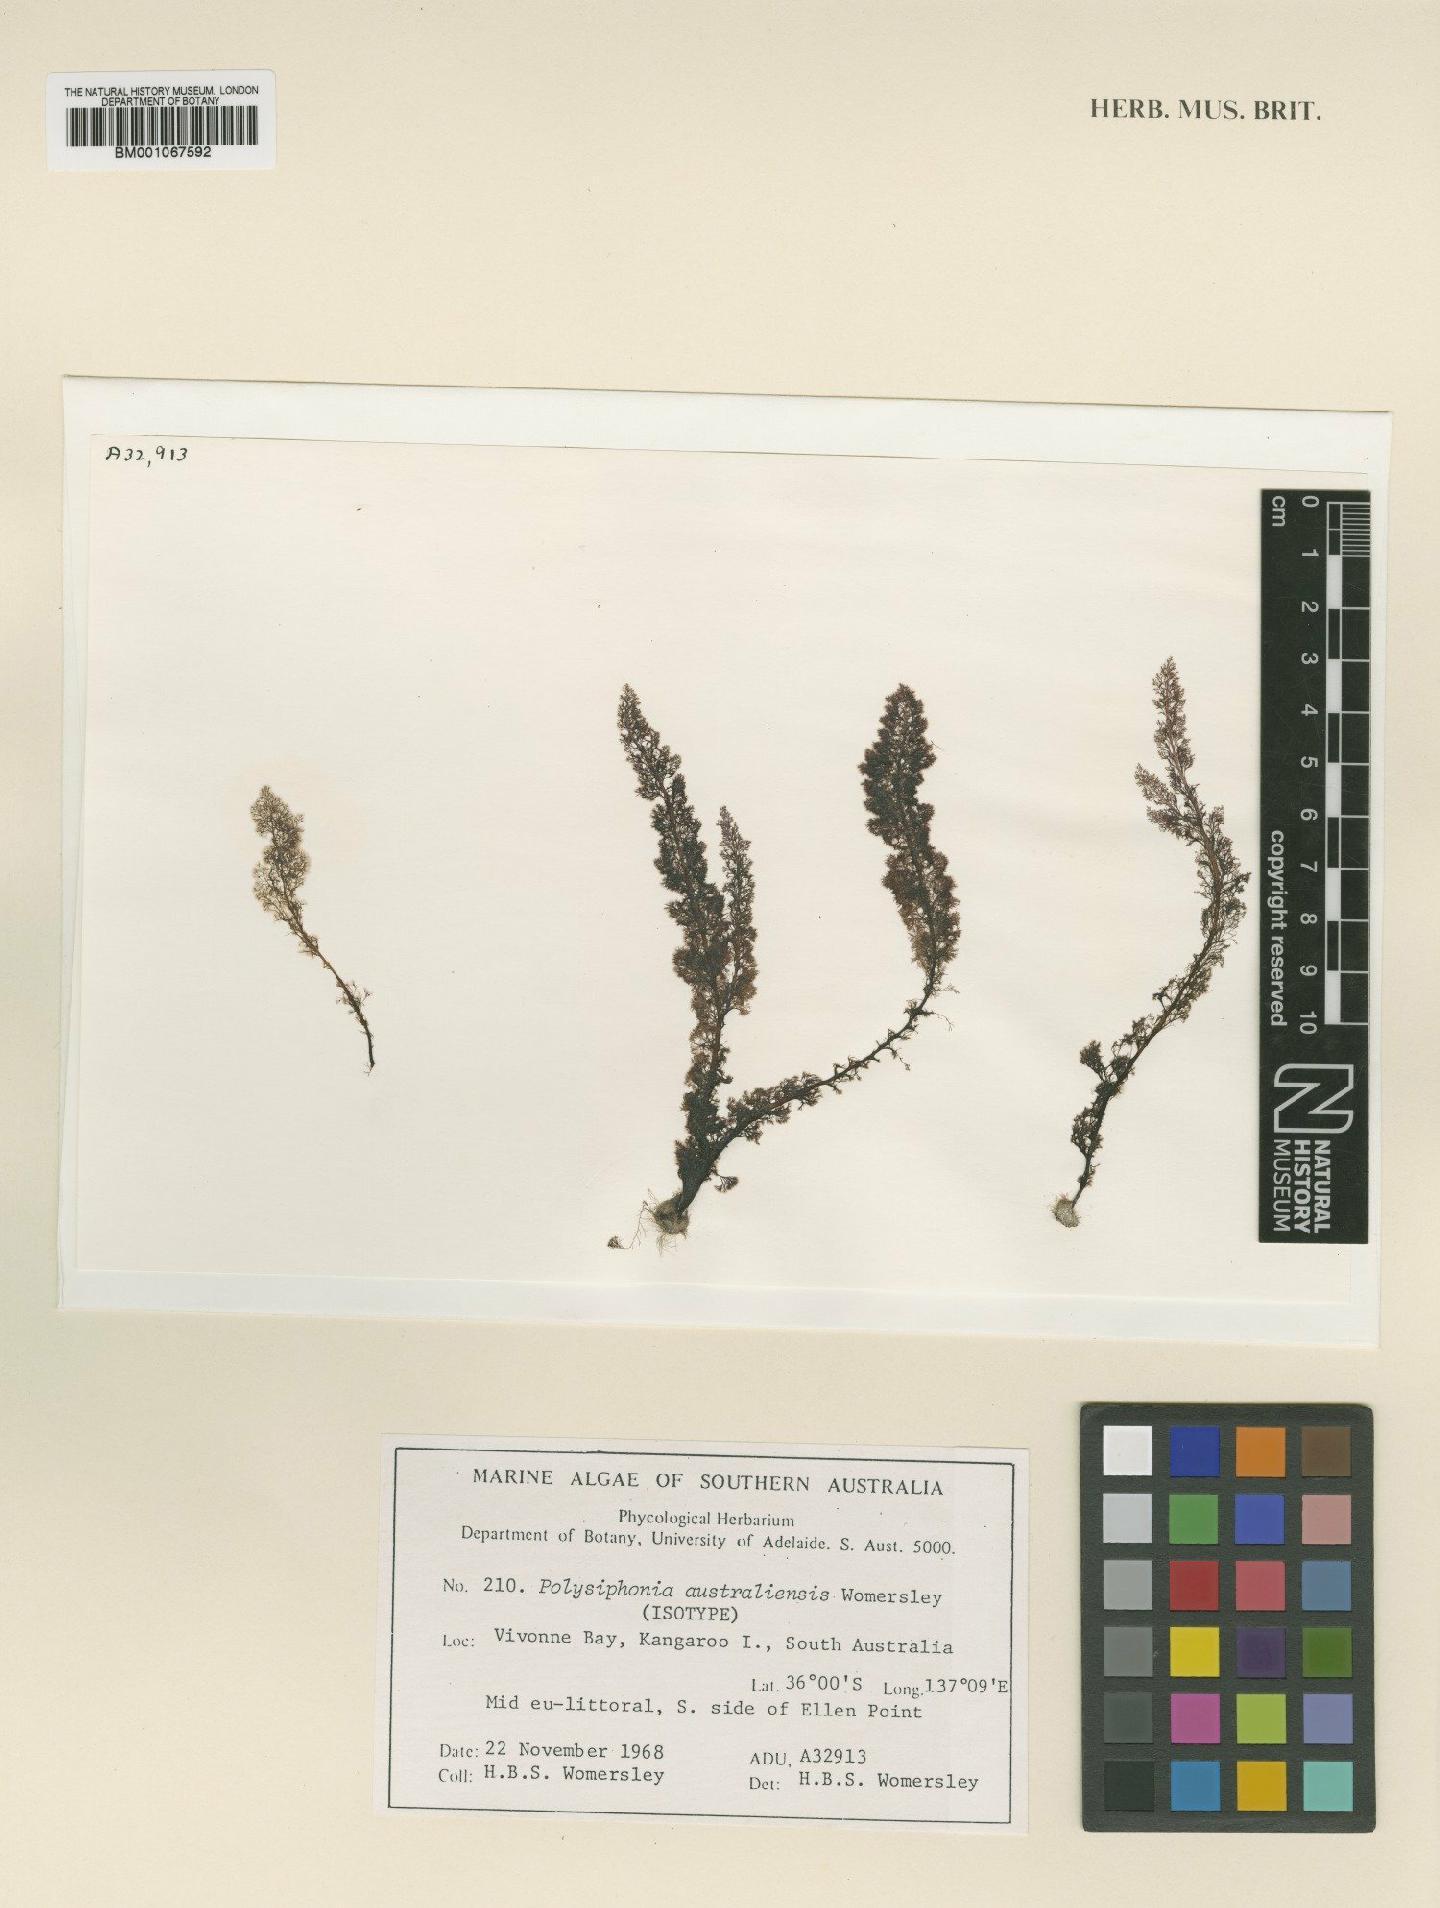 To NHMUK collection (Polysiphonia australiensis Womersley; Isotype; NHMUK:ecatalogue:2303010)